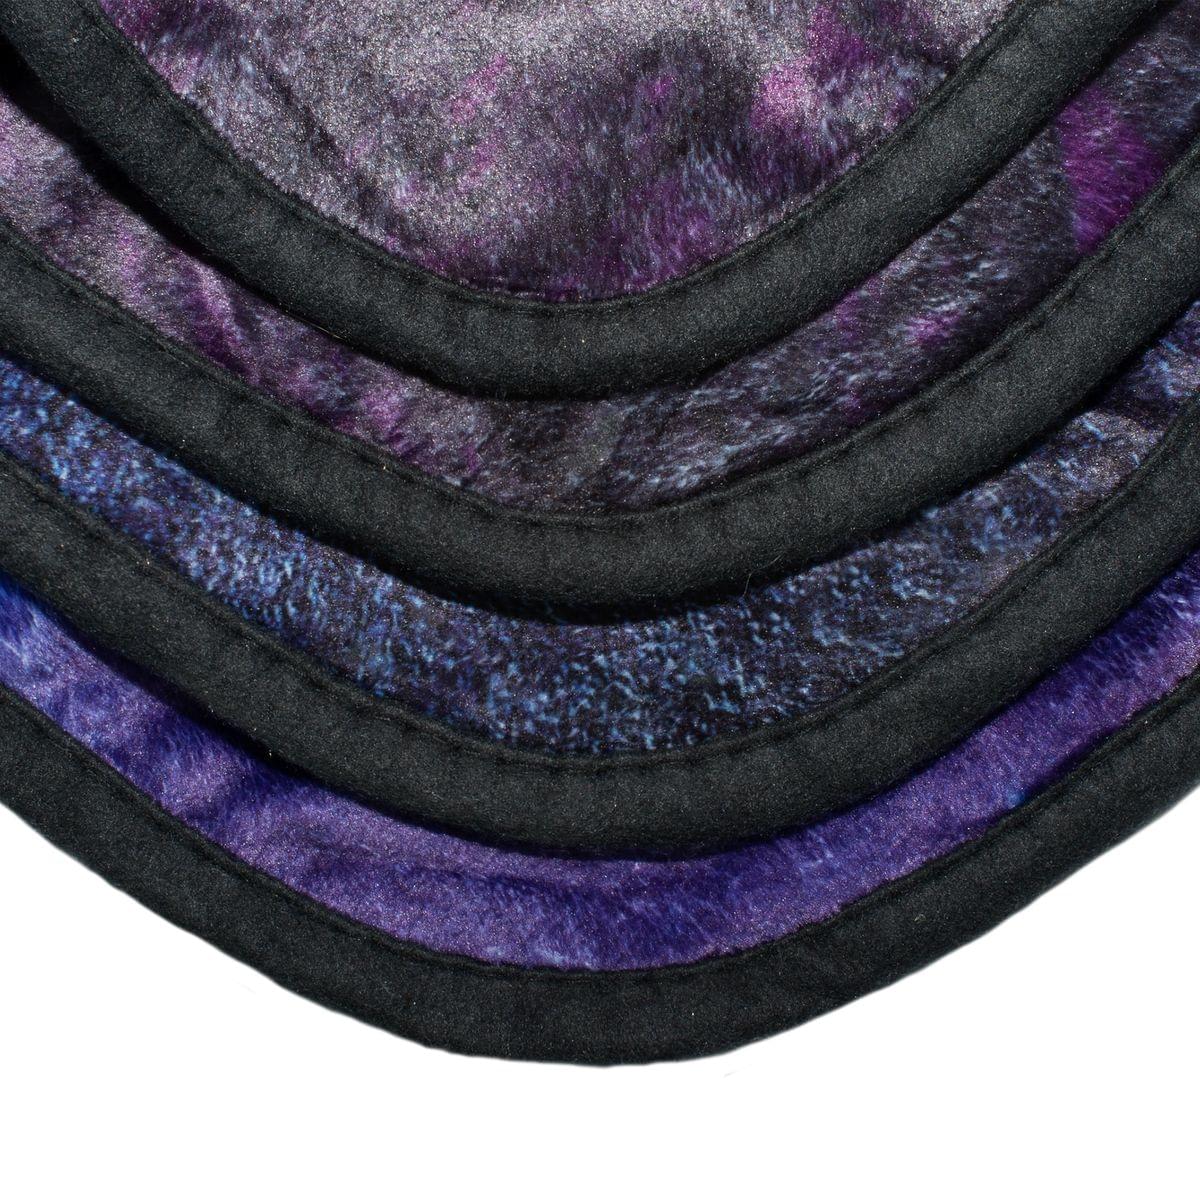 Avengers Infinity War Lightweight Fleece Throw Blanket| 45x60 Inches